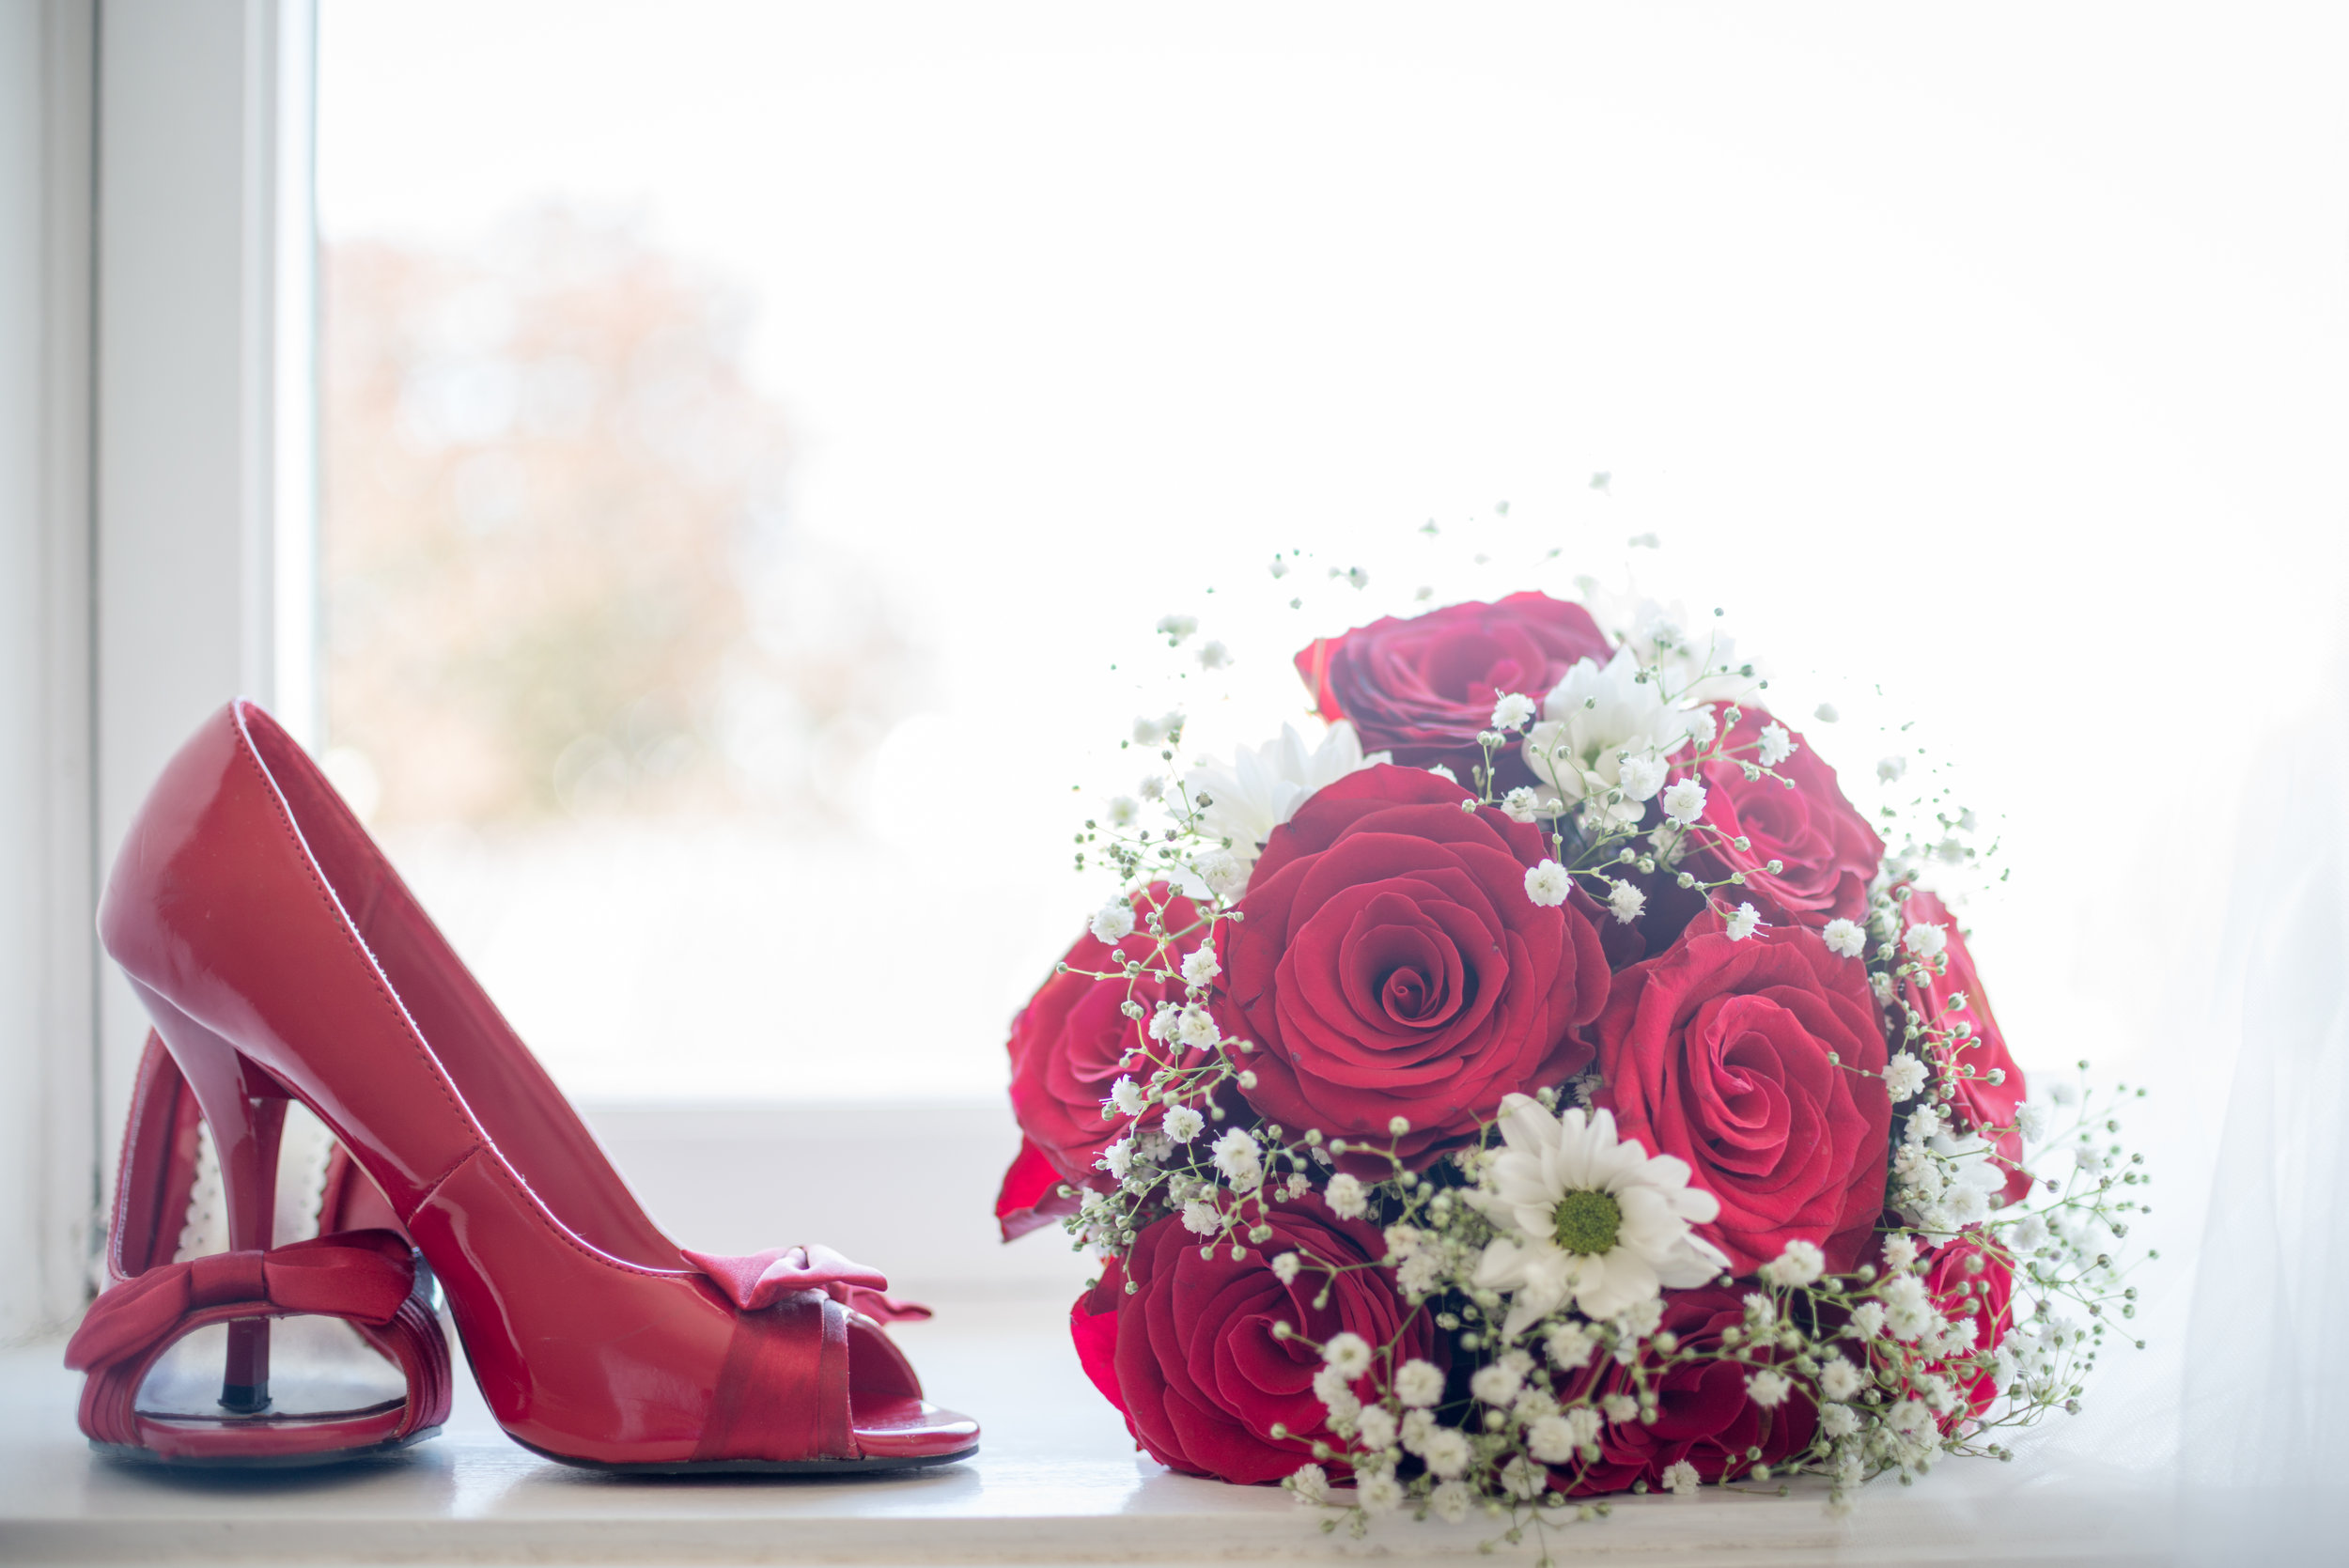 Wedding shoes and bouquet details guillem Cheung Stavanger bryllup